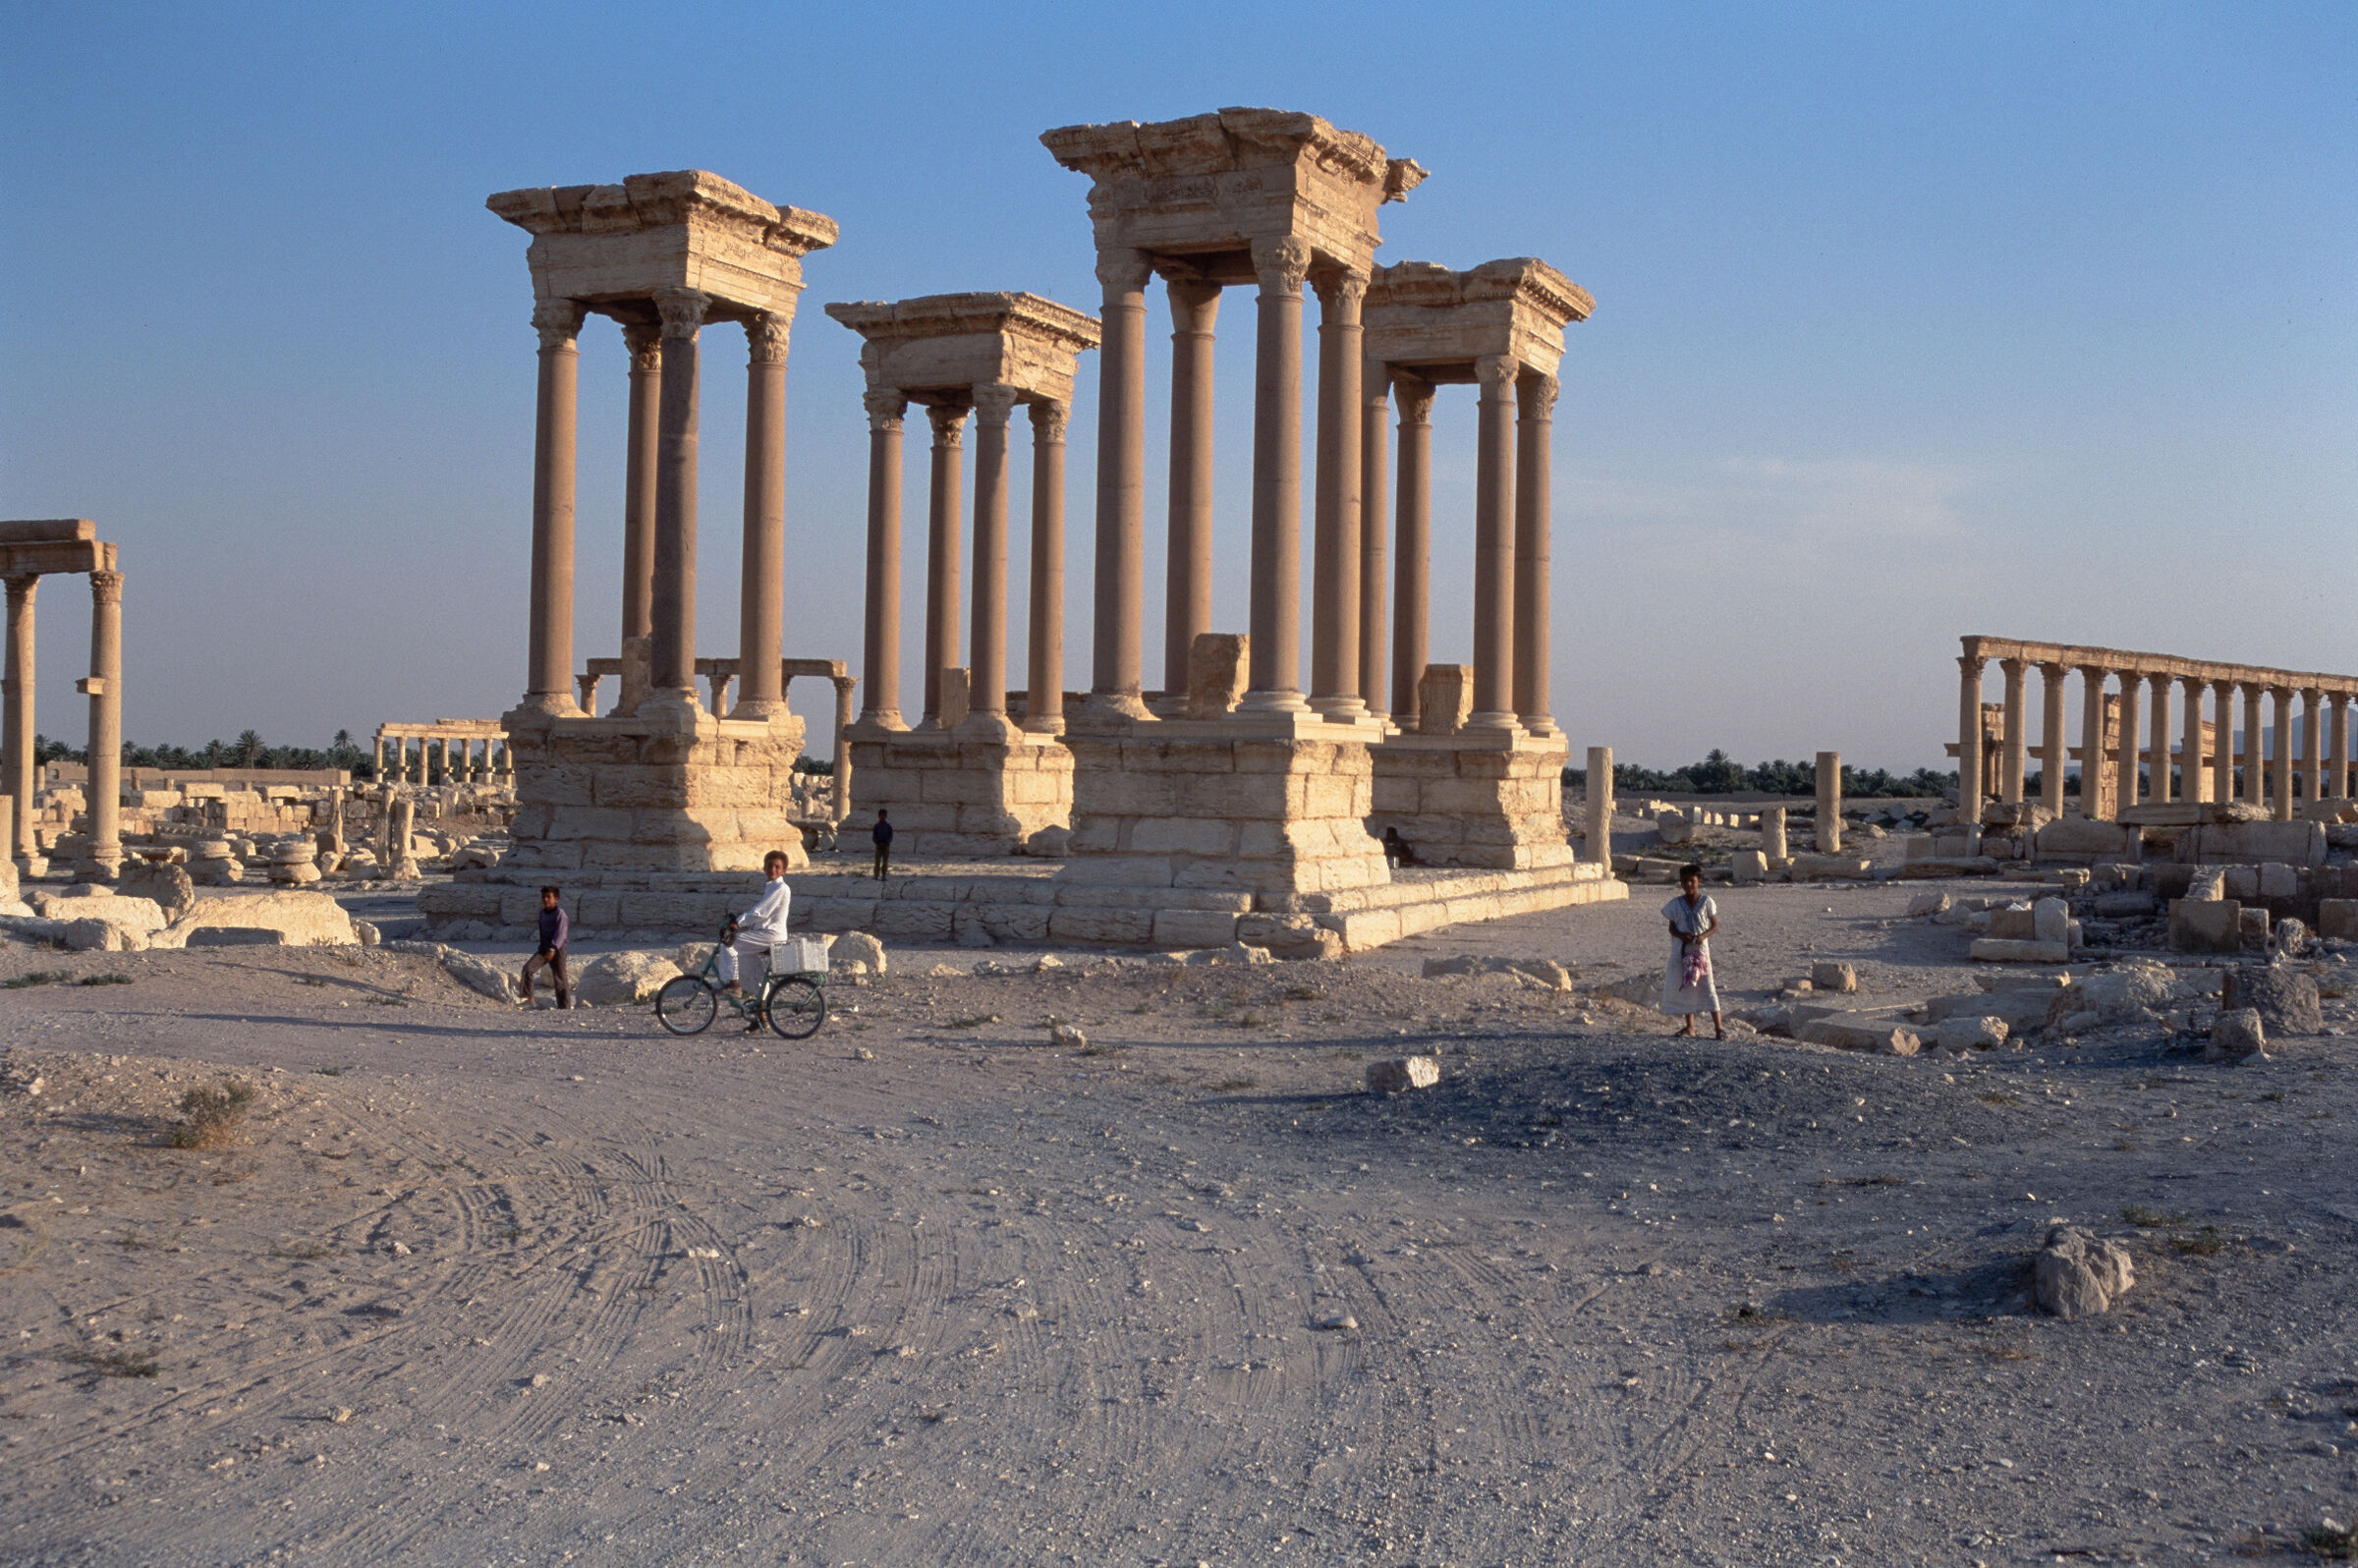 A tetrapylon structure in Palmyra, Syria